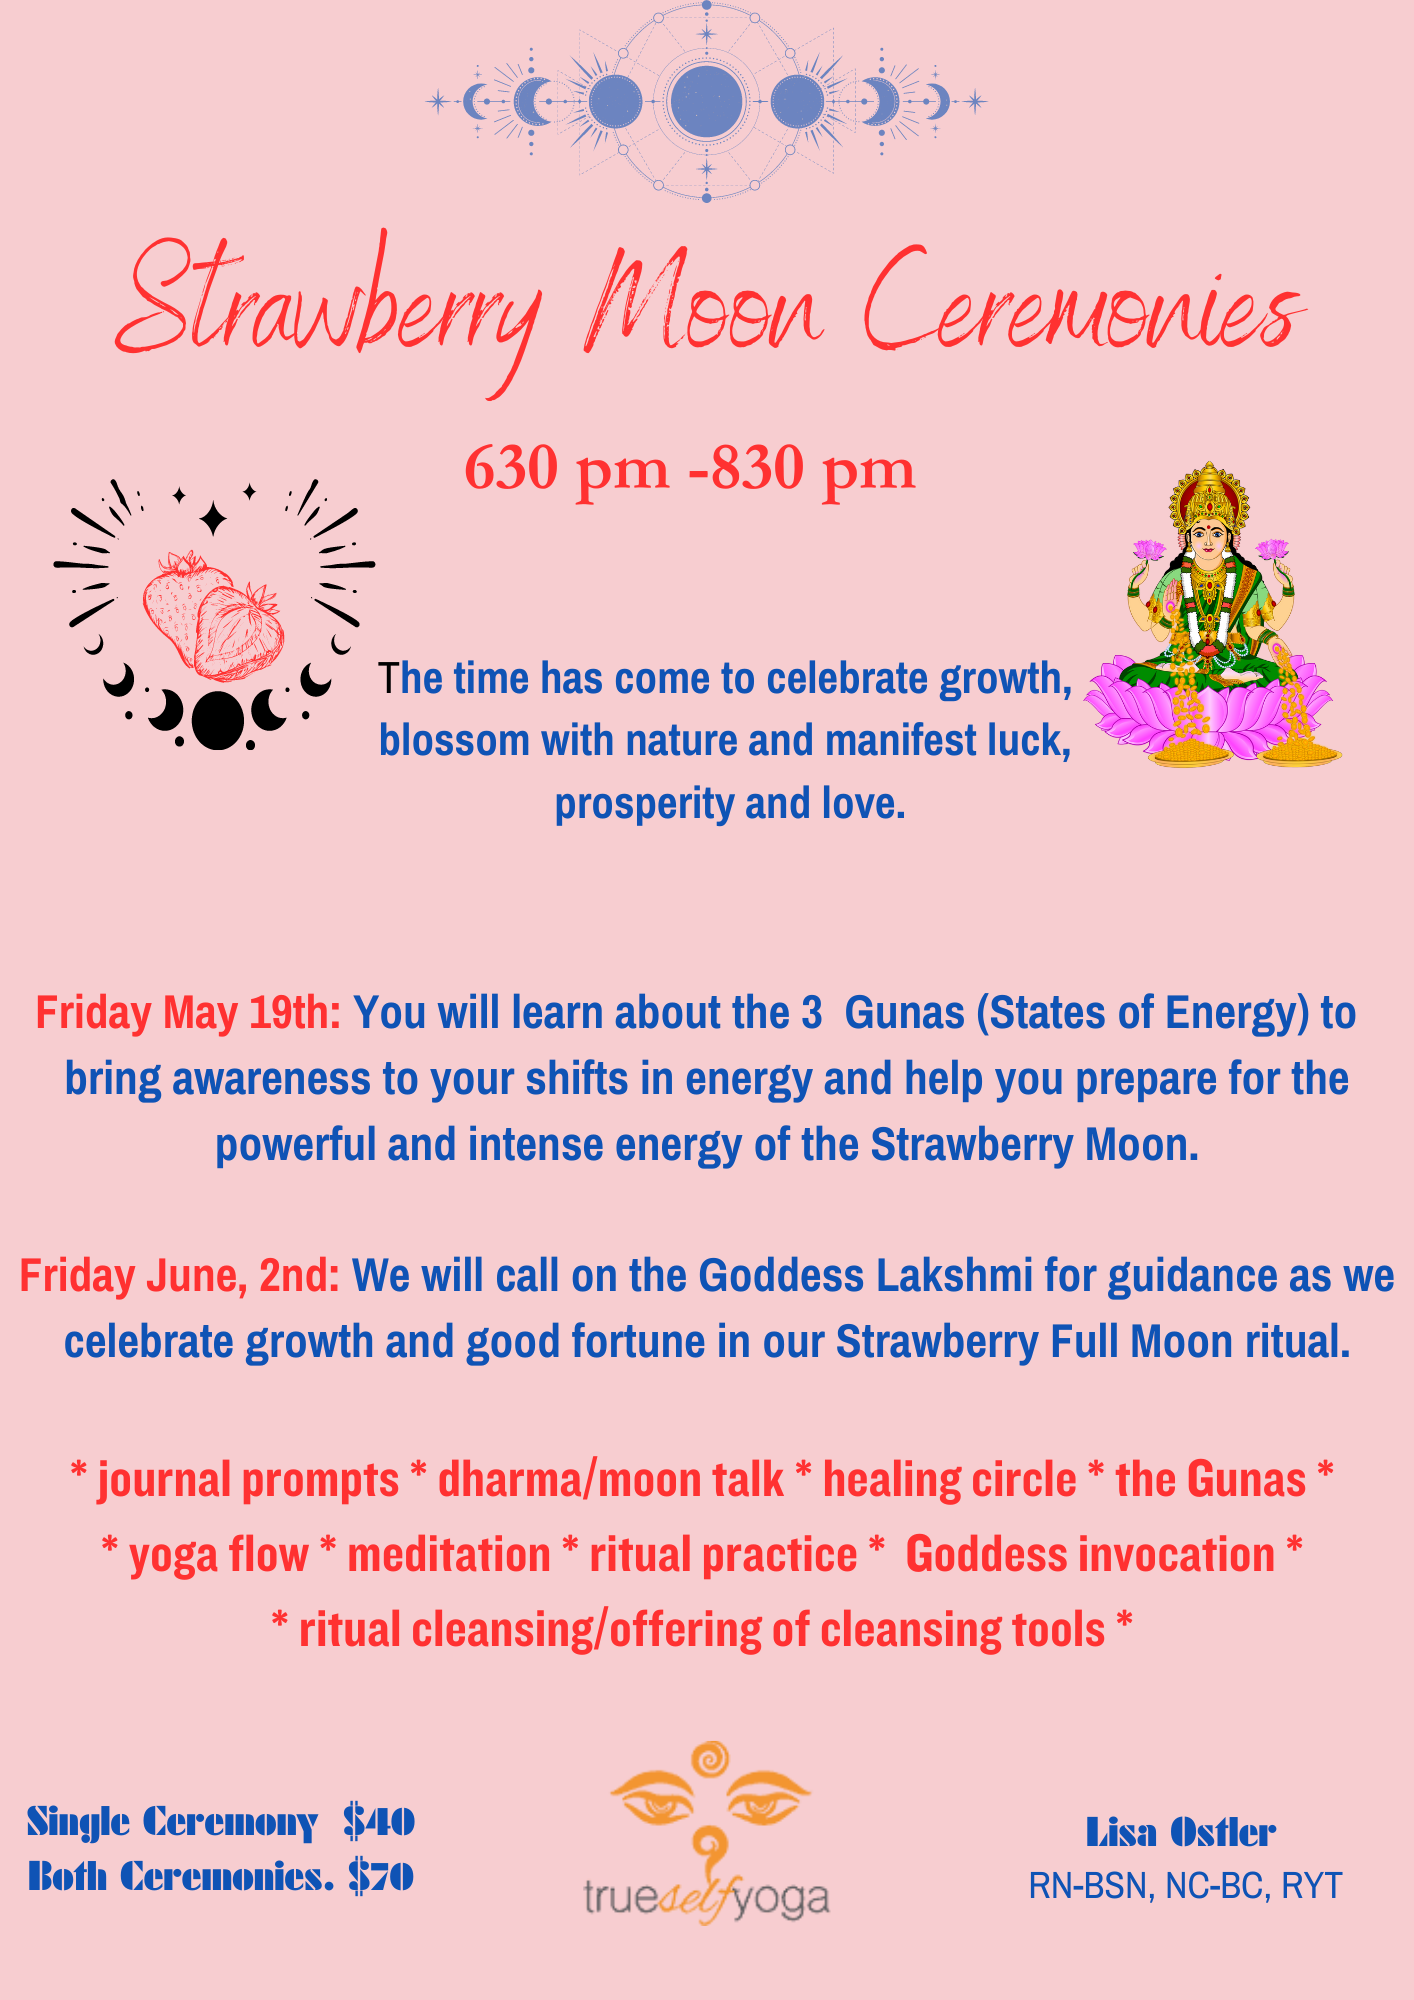 Strawberry Moon Ceremonies True Self Yoga